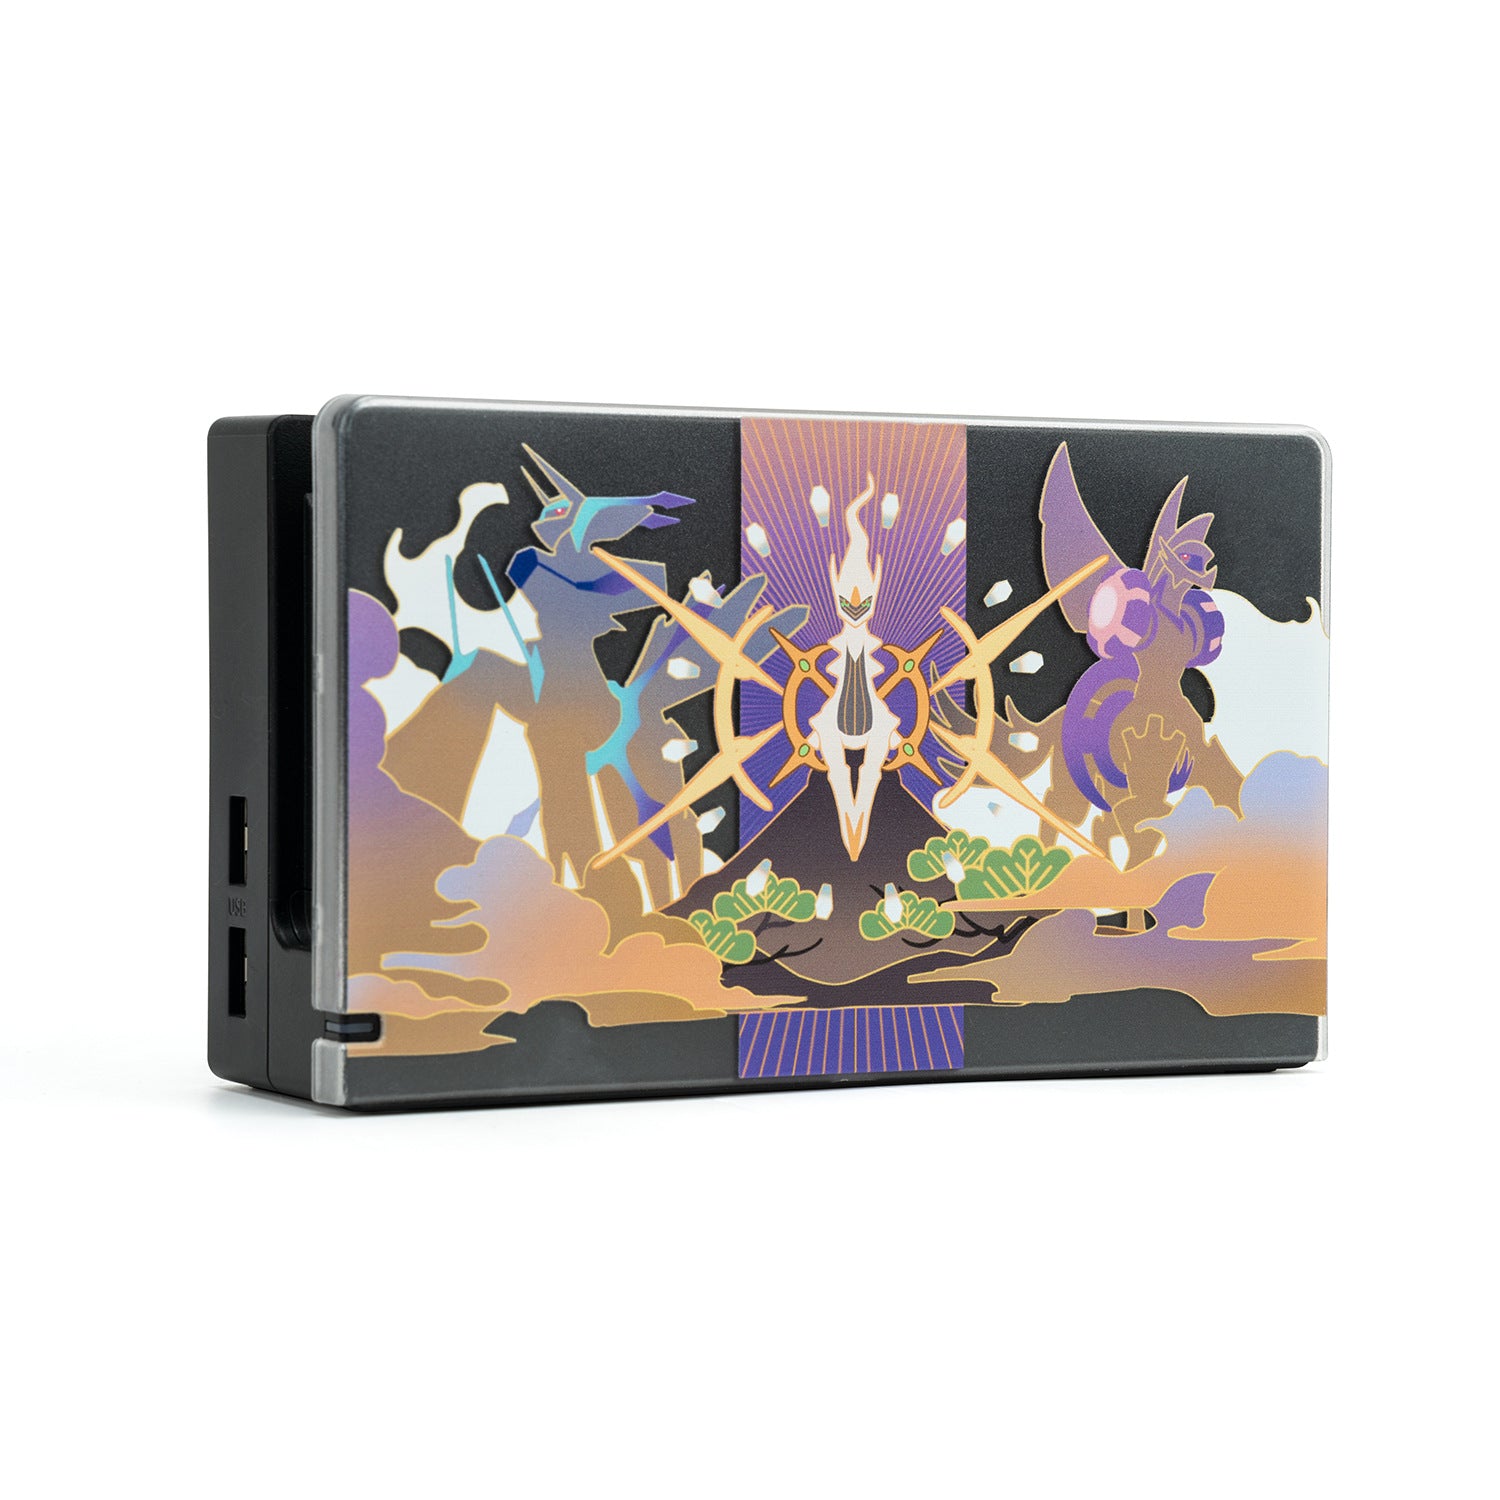 Switch/OLED Legends: Case Nintendo Themed – Pokémon EtgSky Original Set Design Arceus